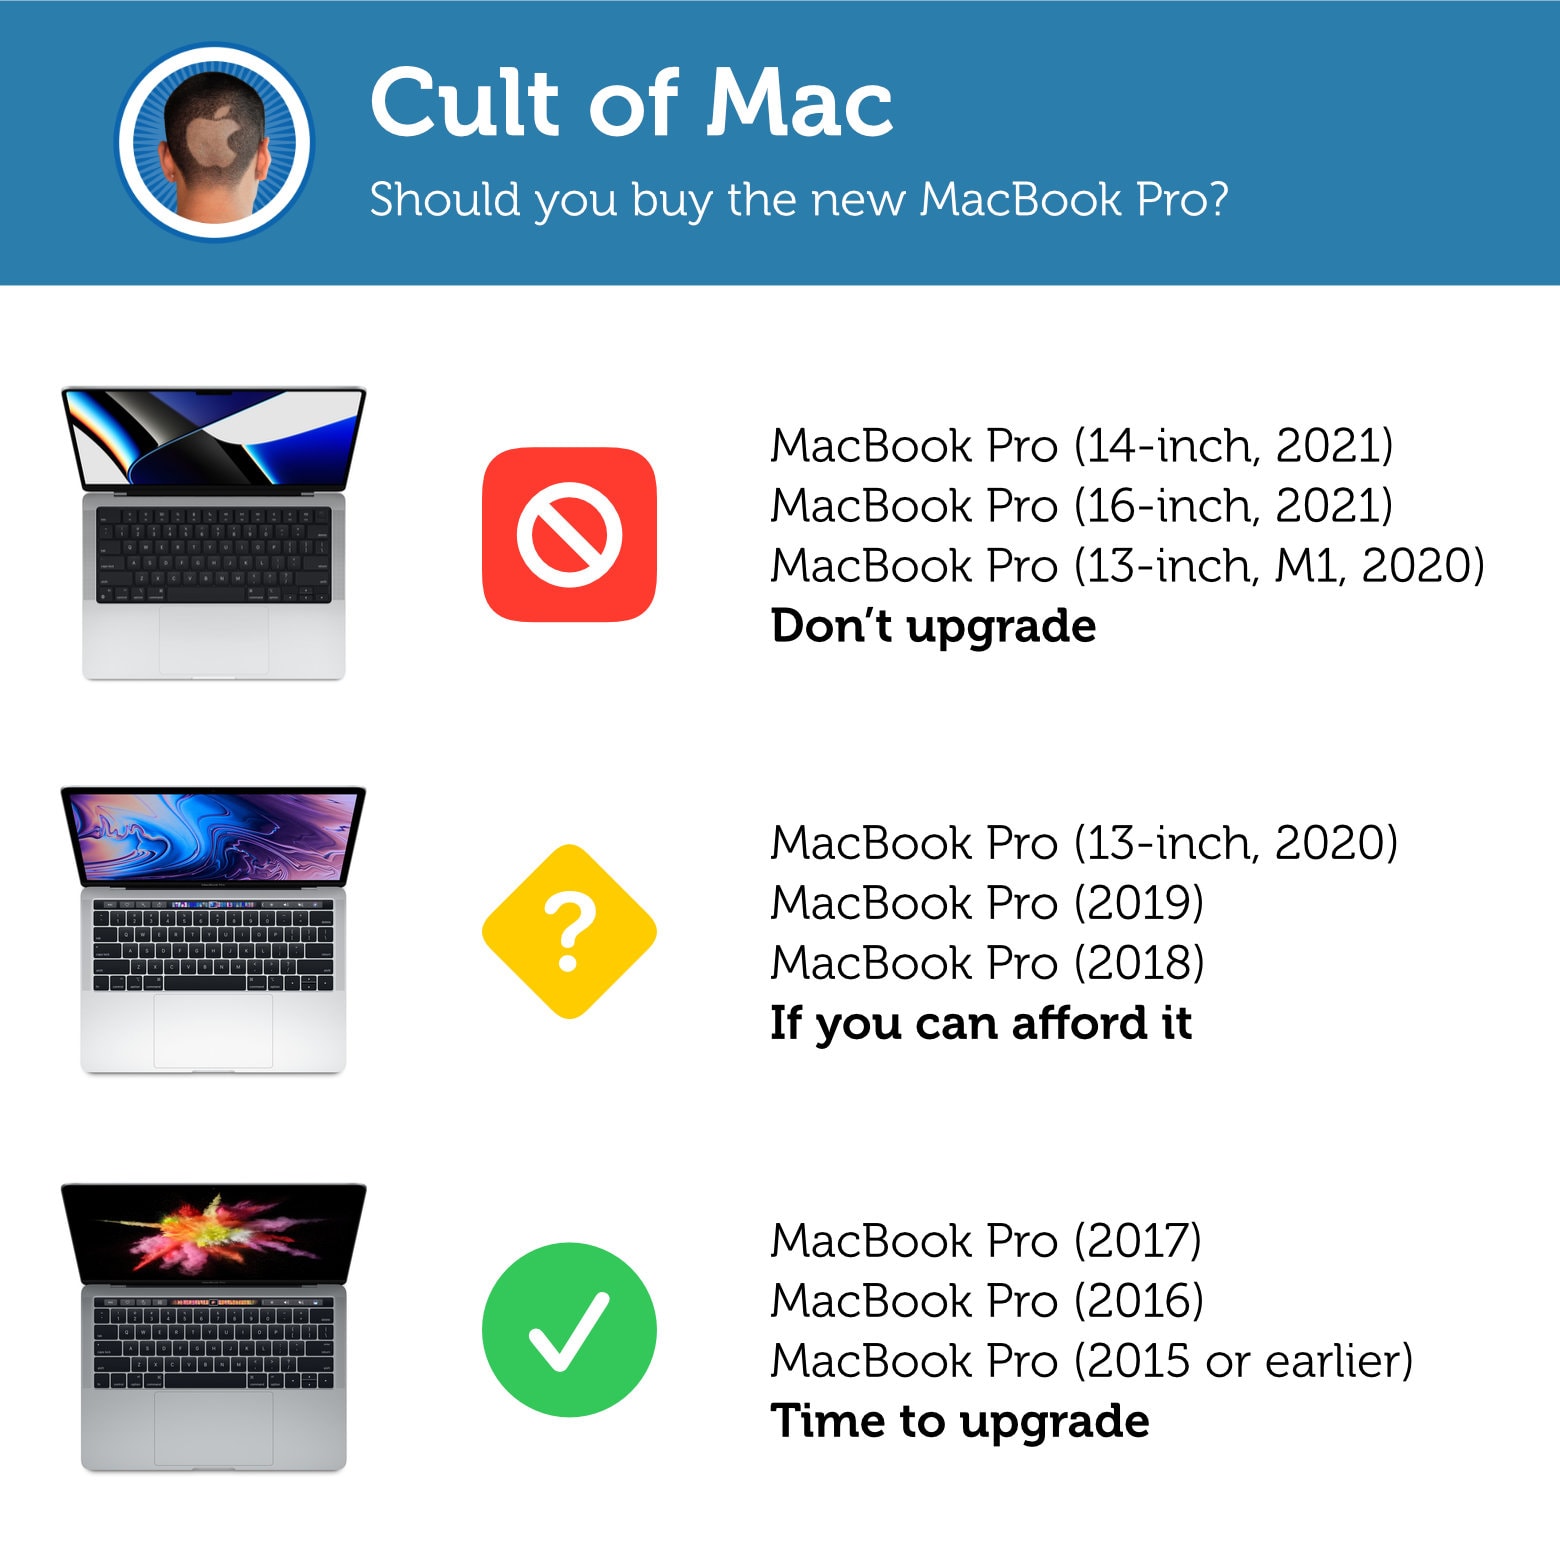 Should you buy the new MacBook Pro or Mac mini?